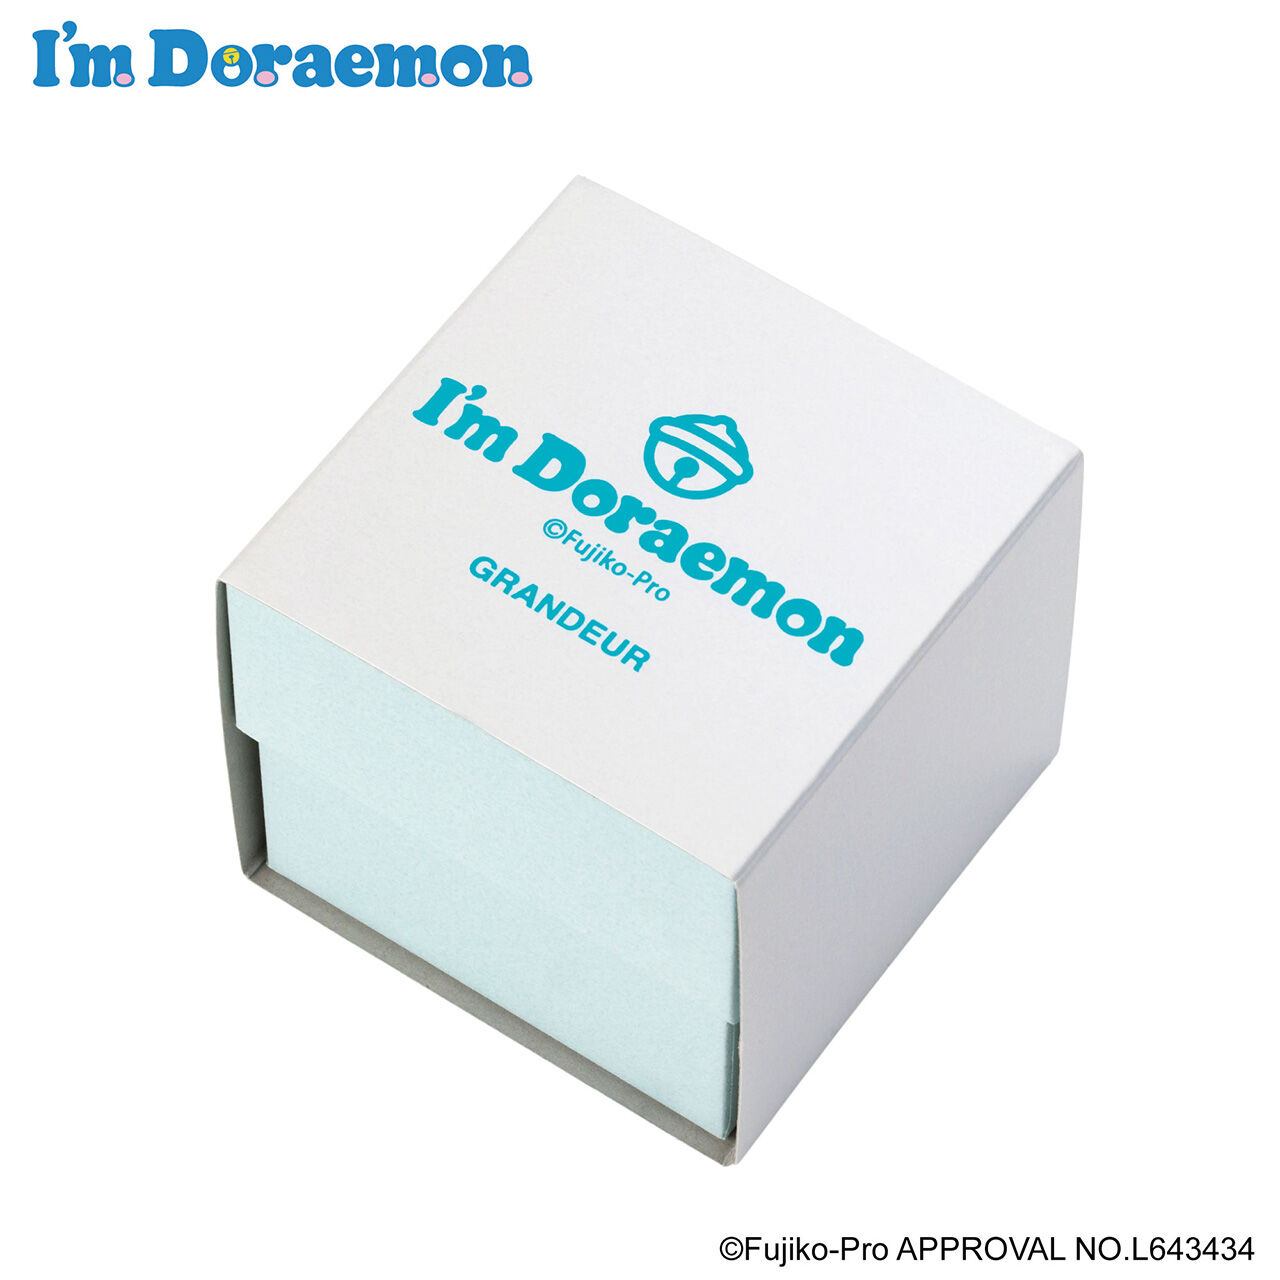 「I’m Doraemon」GRANDEUR ドラえもん セラミックウォッチ,, large image number 3